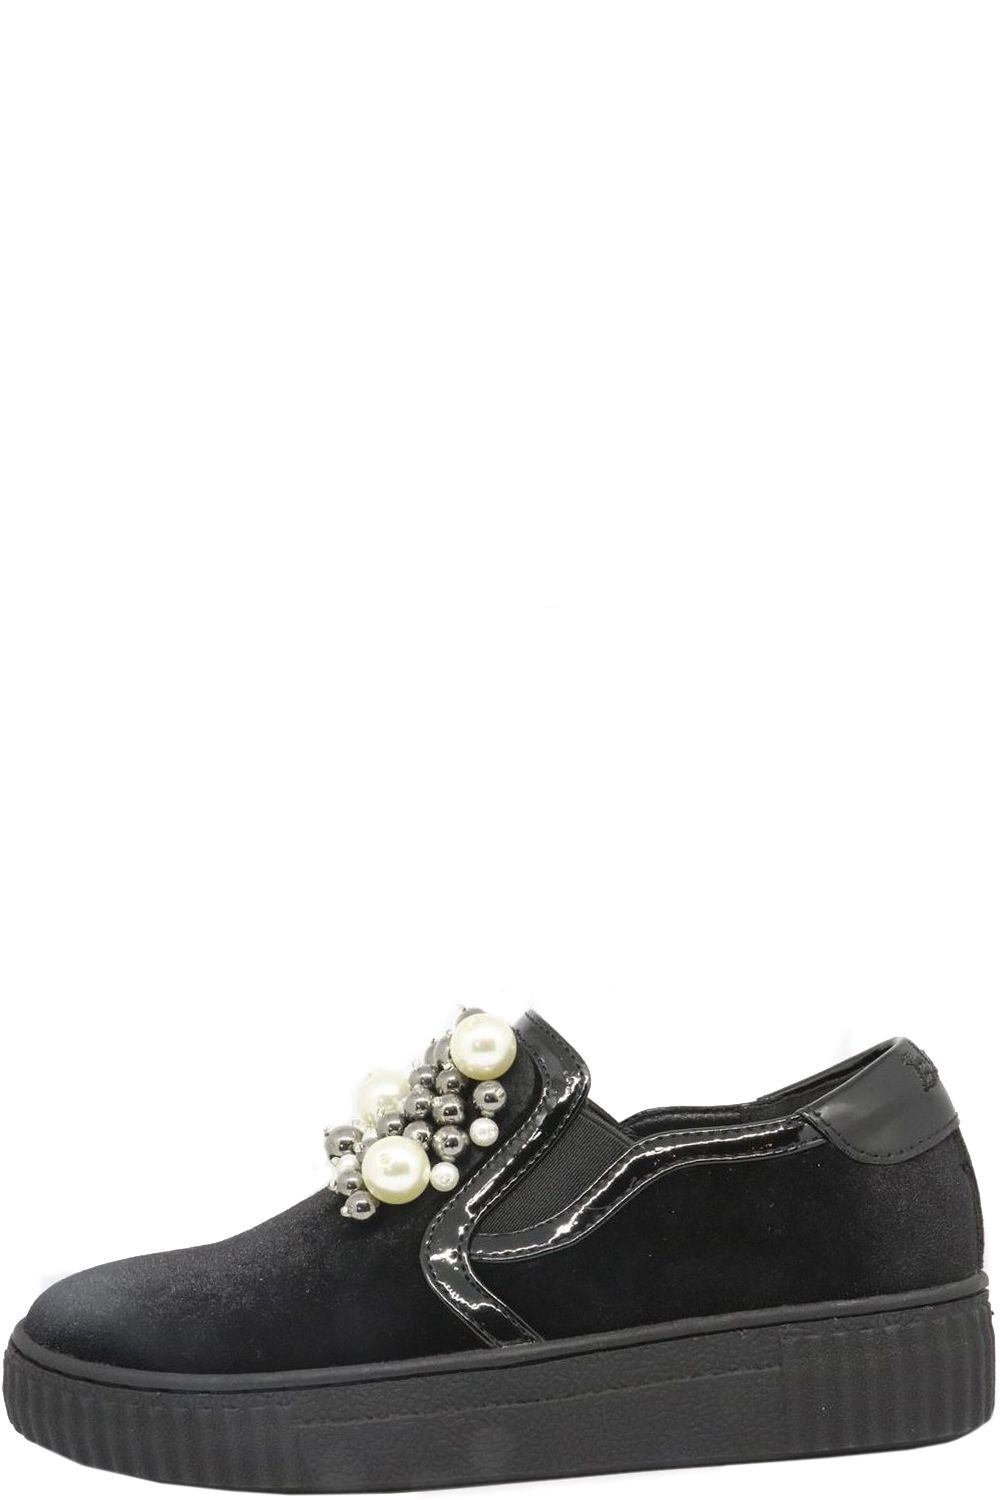 Ботинки Holala, размер 30, цвет черный HS0020T0002J014 - фото 1